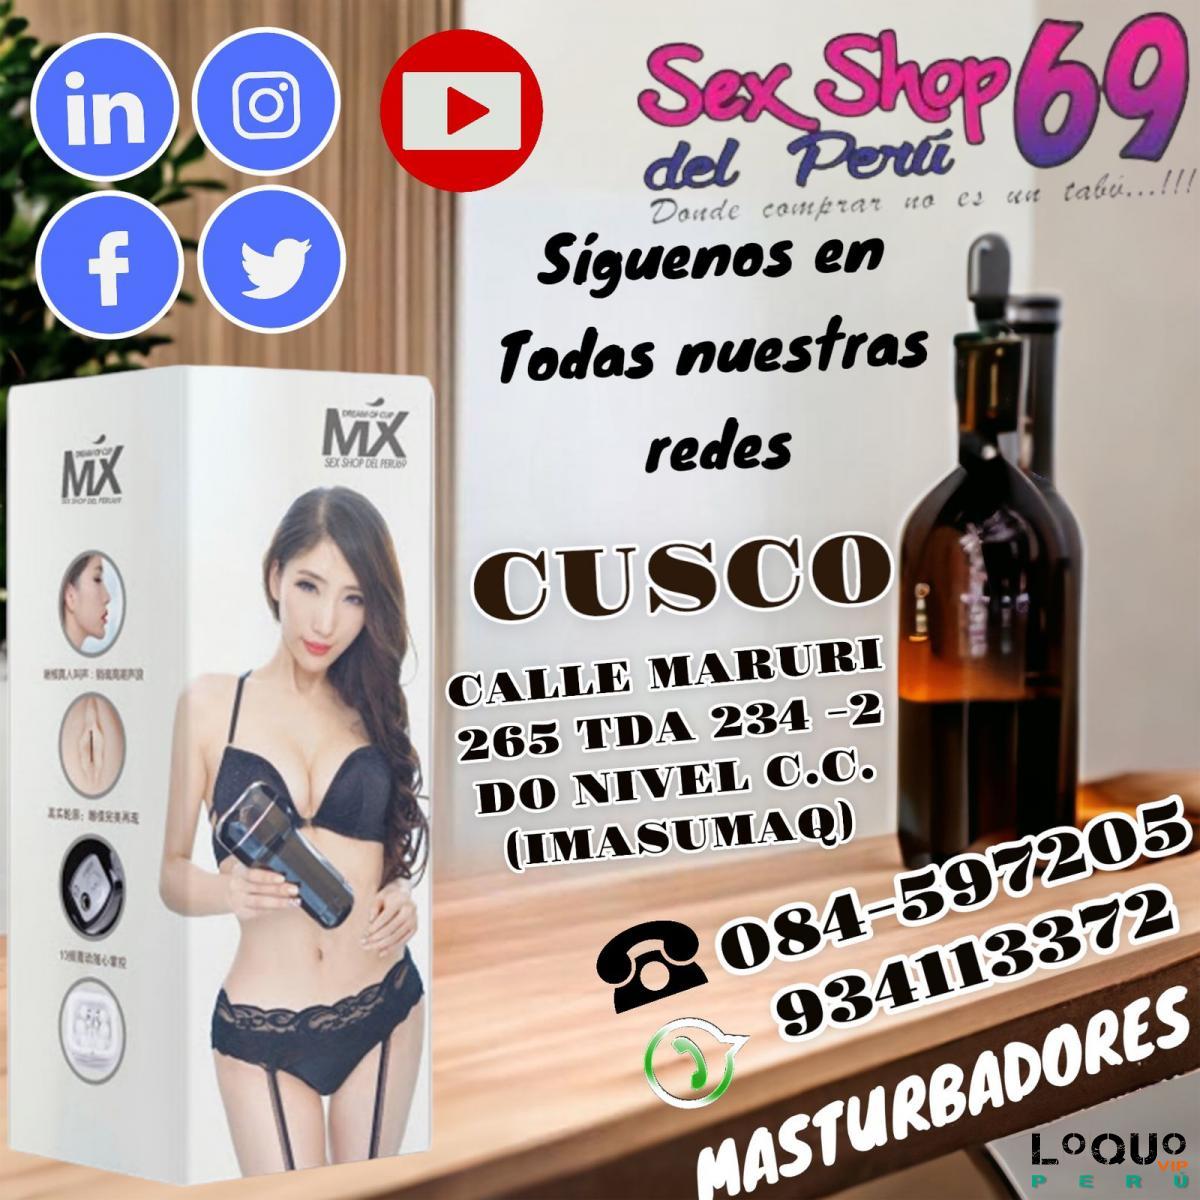 Sex Shop Arequipa: masturbador __mx __flexible _textura suave _